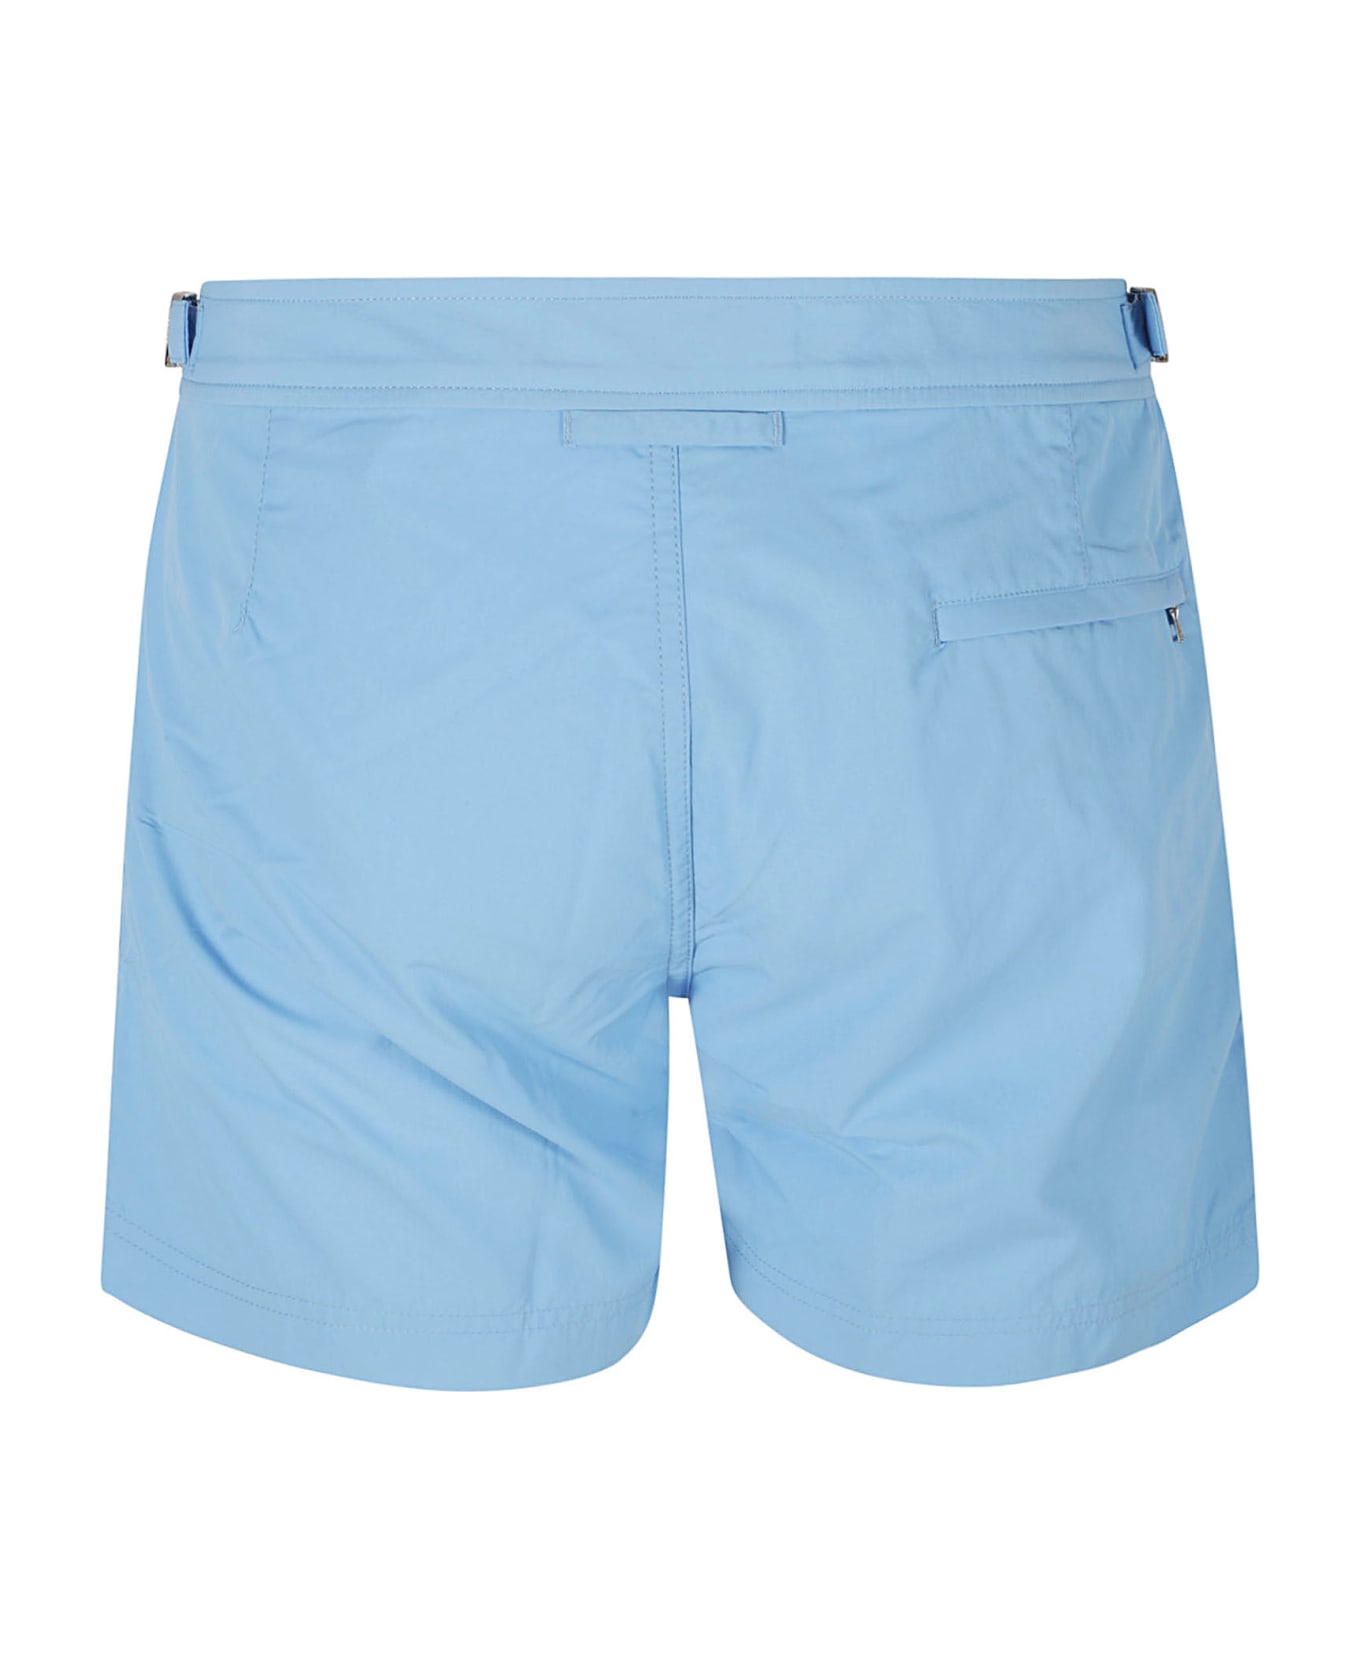 Orlebar Brown Setter Shorts - Riviera